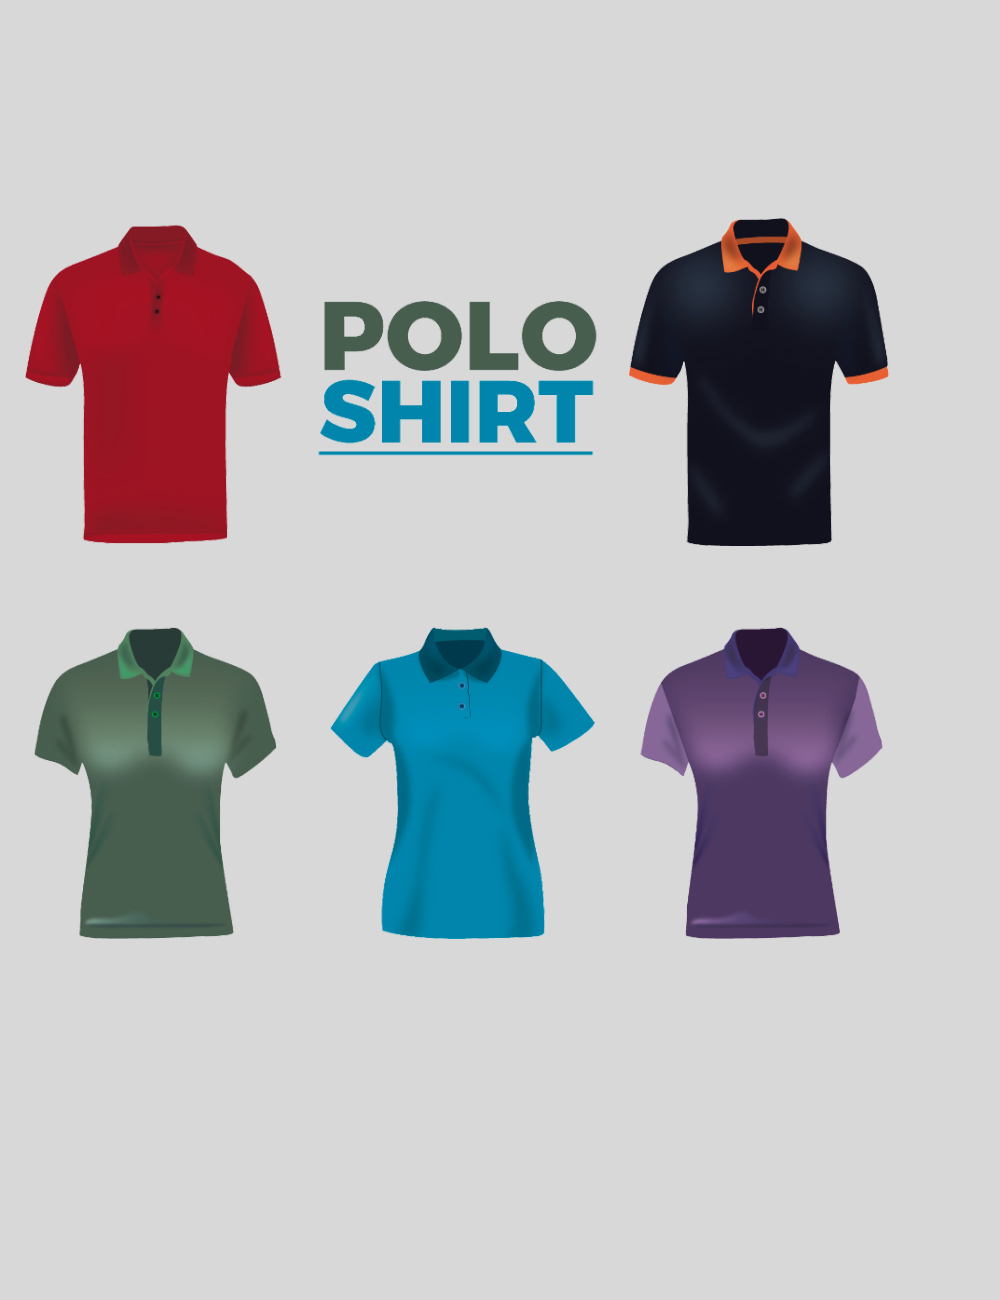 Polo tshirt manufacturers